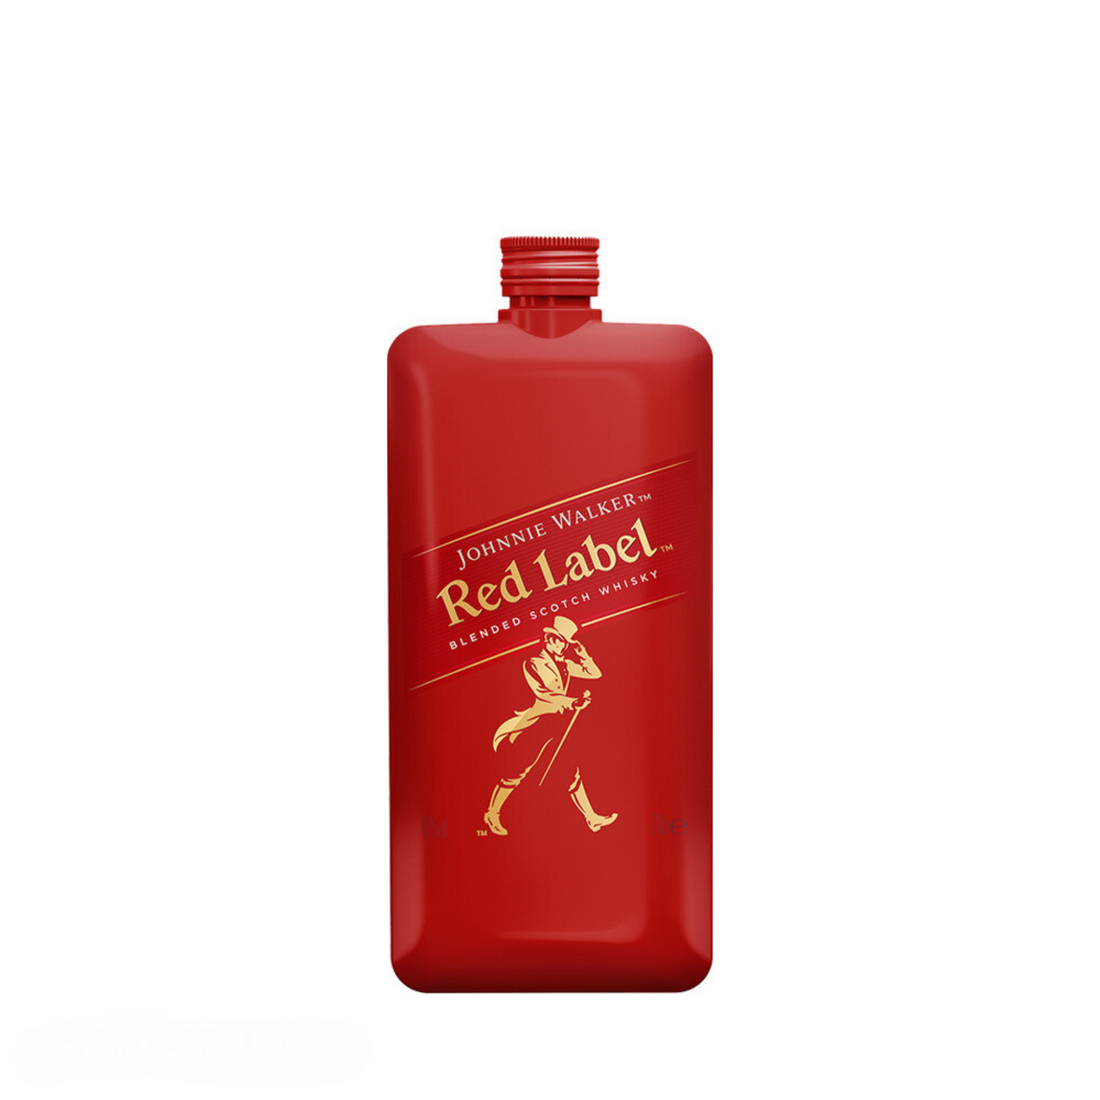 Johnnie Walker Red Label, 200mL Pocket Size